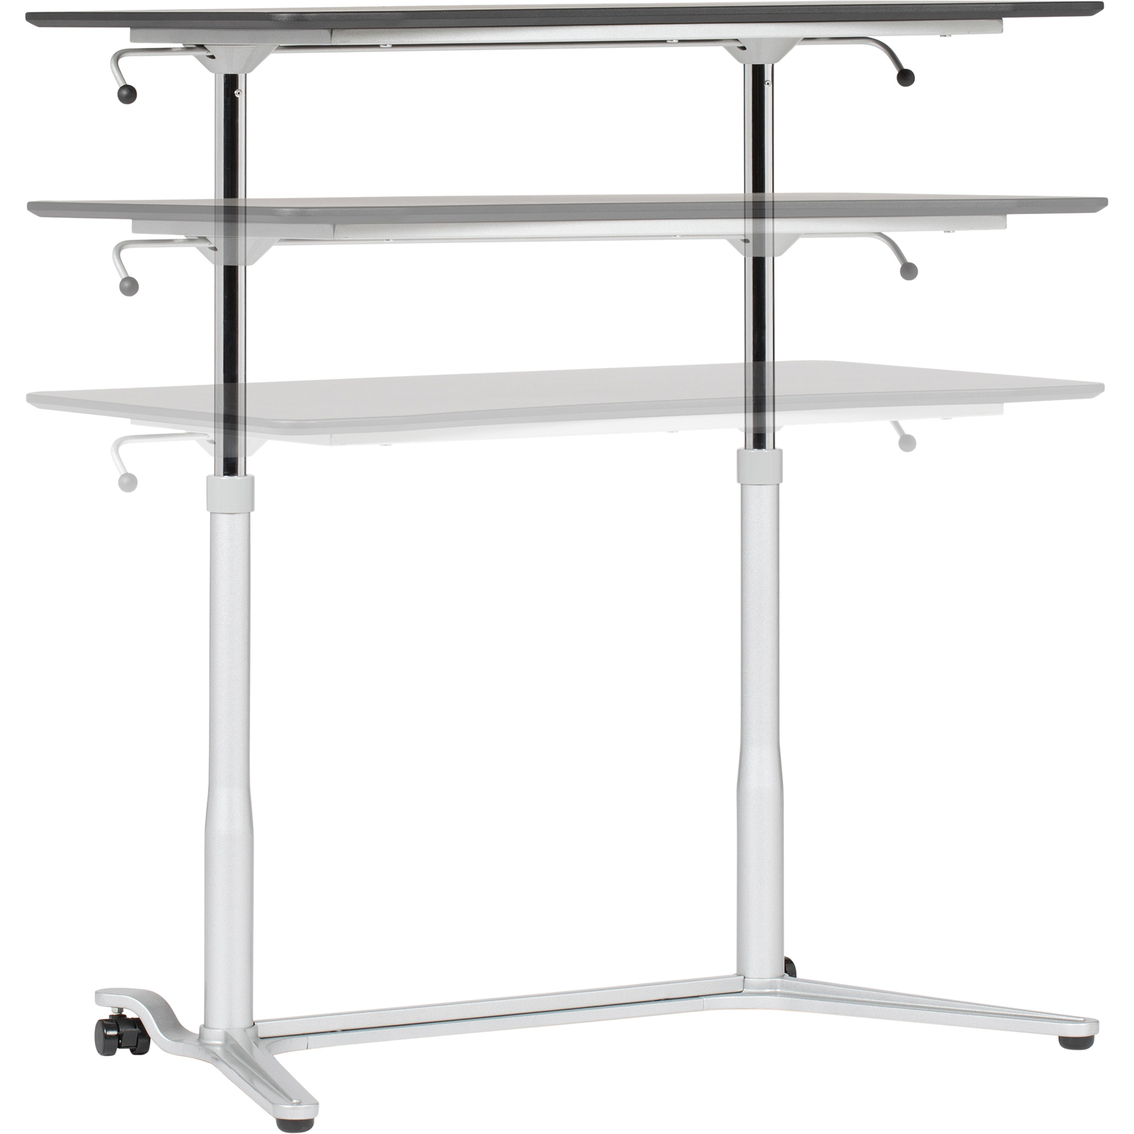 Calico Designs Sierra Adjustable Height Desk - Image 4 of 9